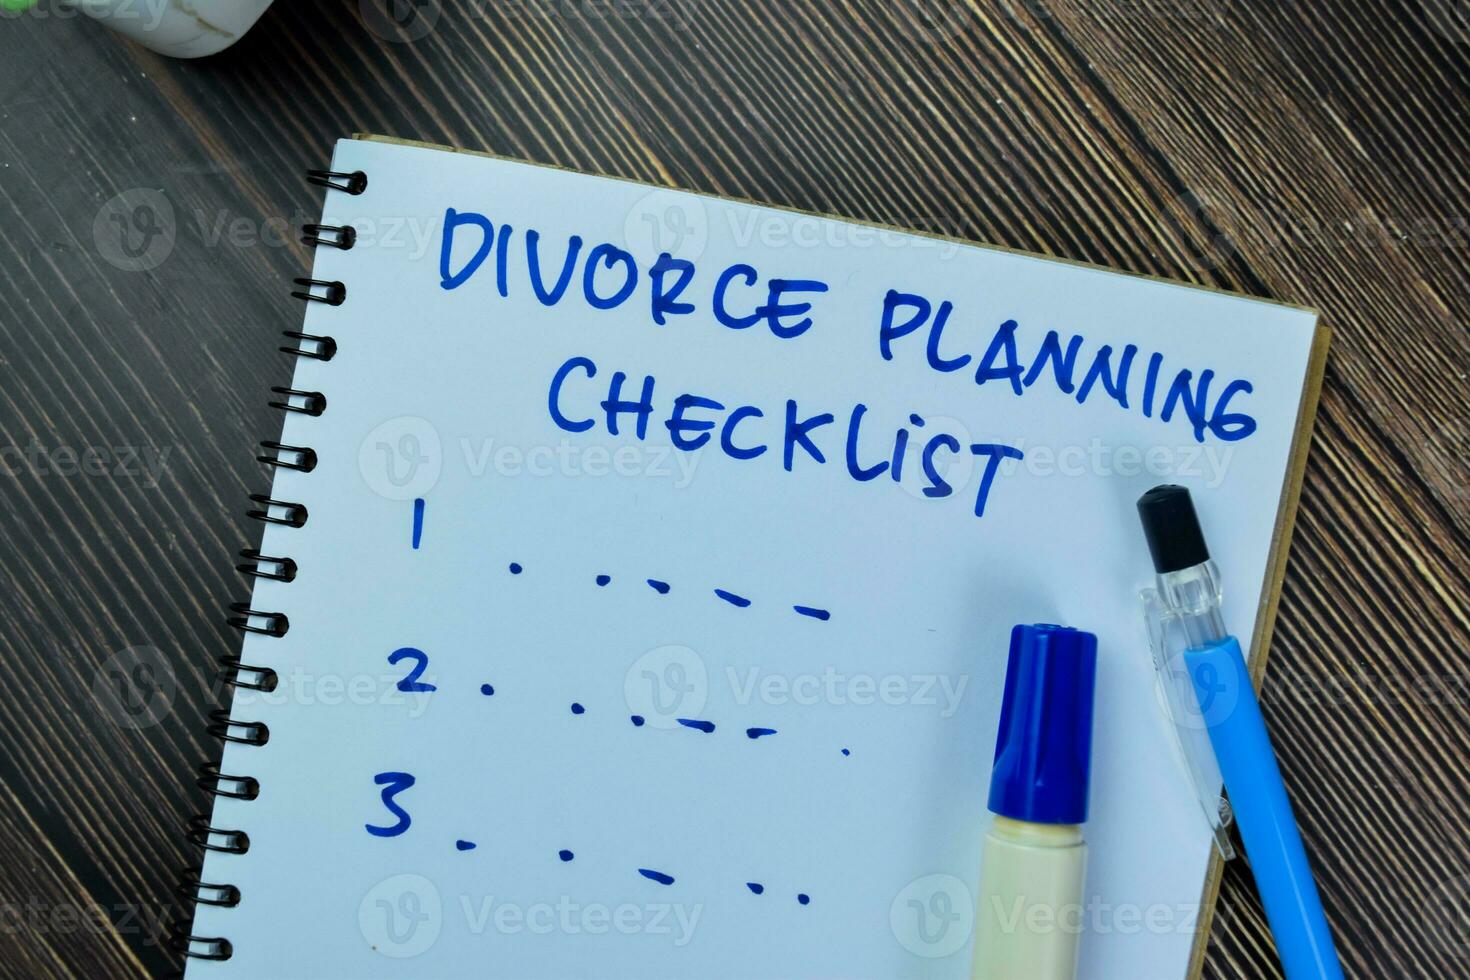 concepto de divorcio planificación Lista de Verificación escribir en libro aislado en de madera mesa. foto